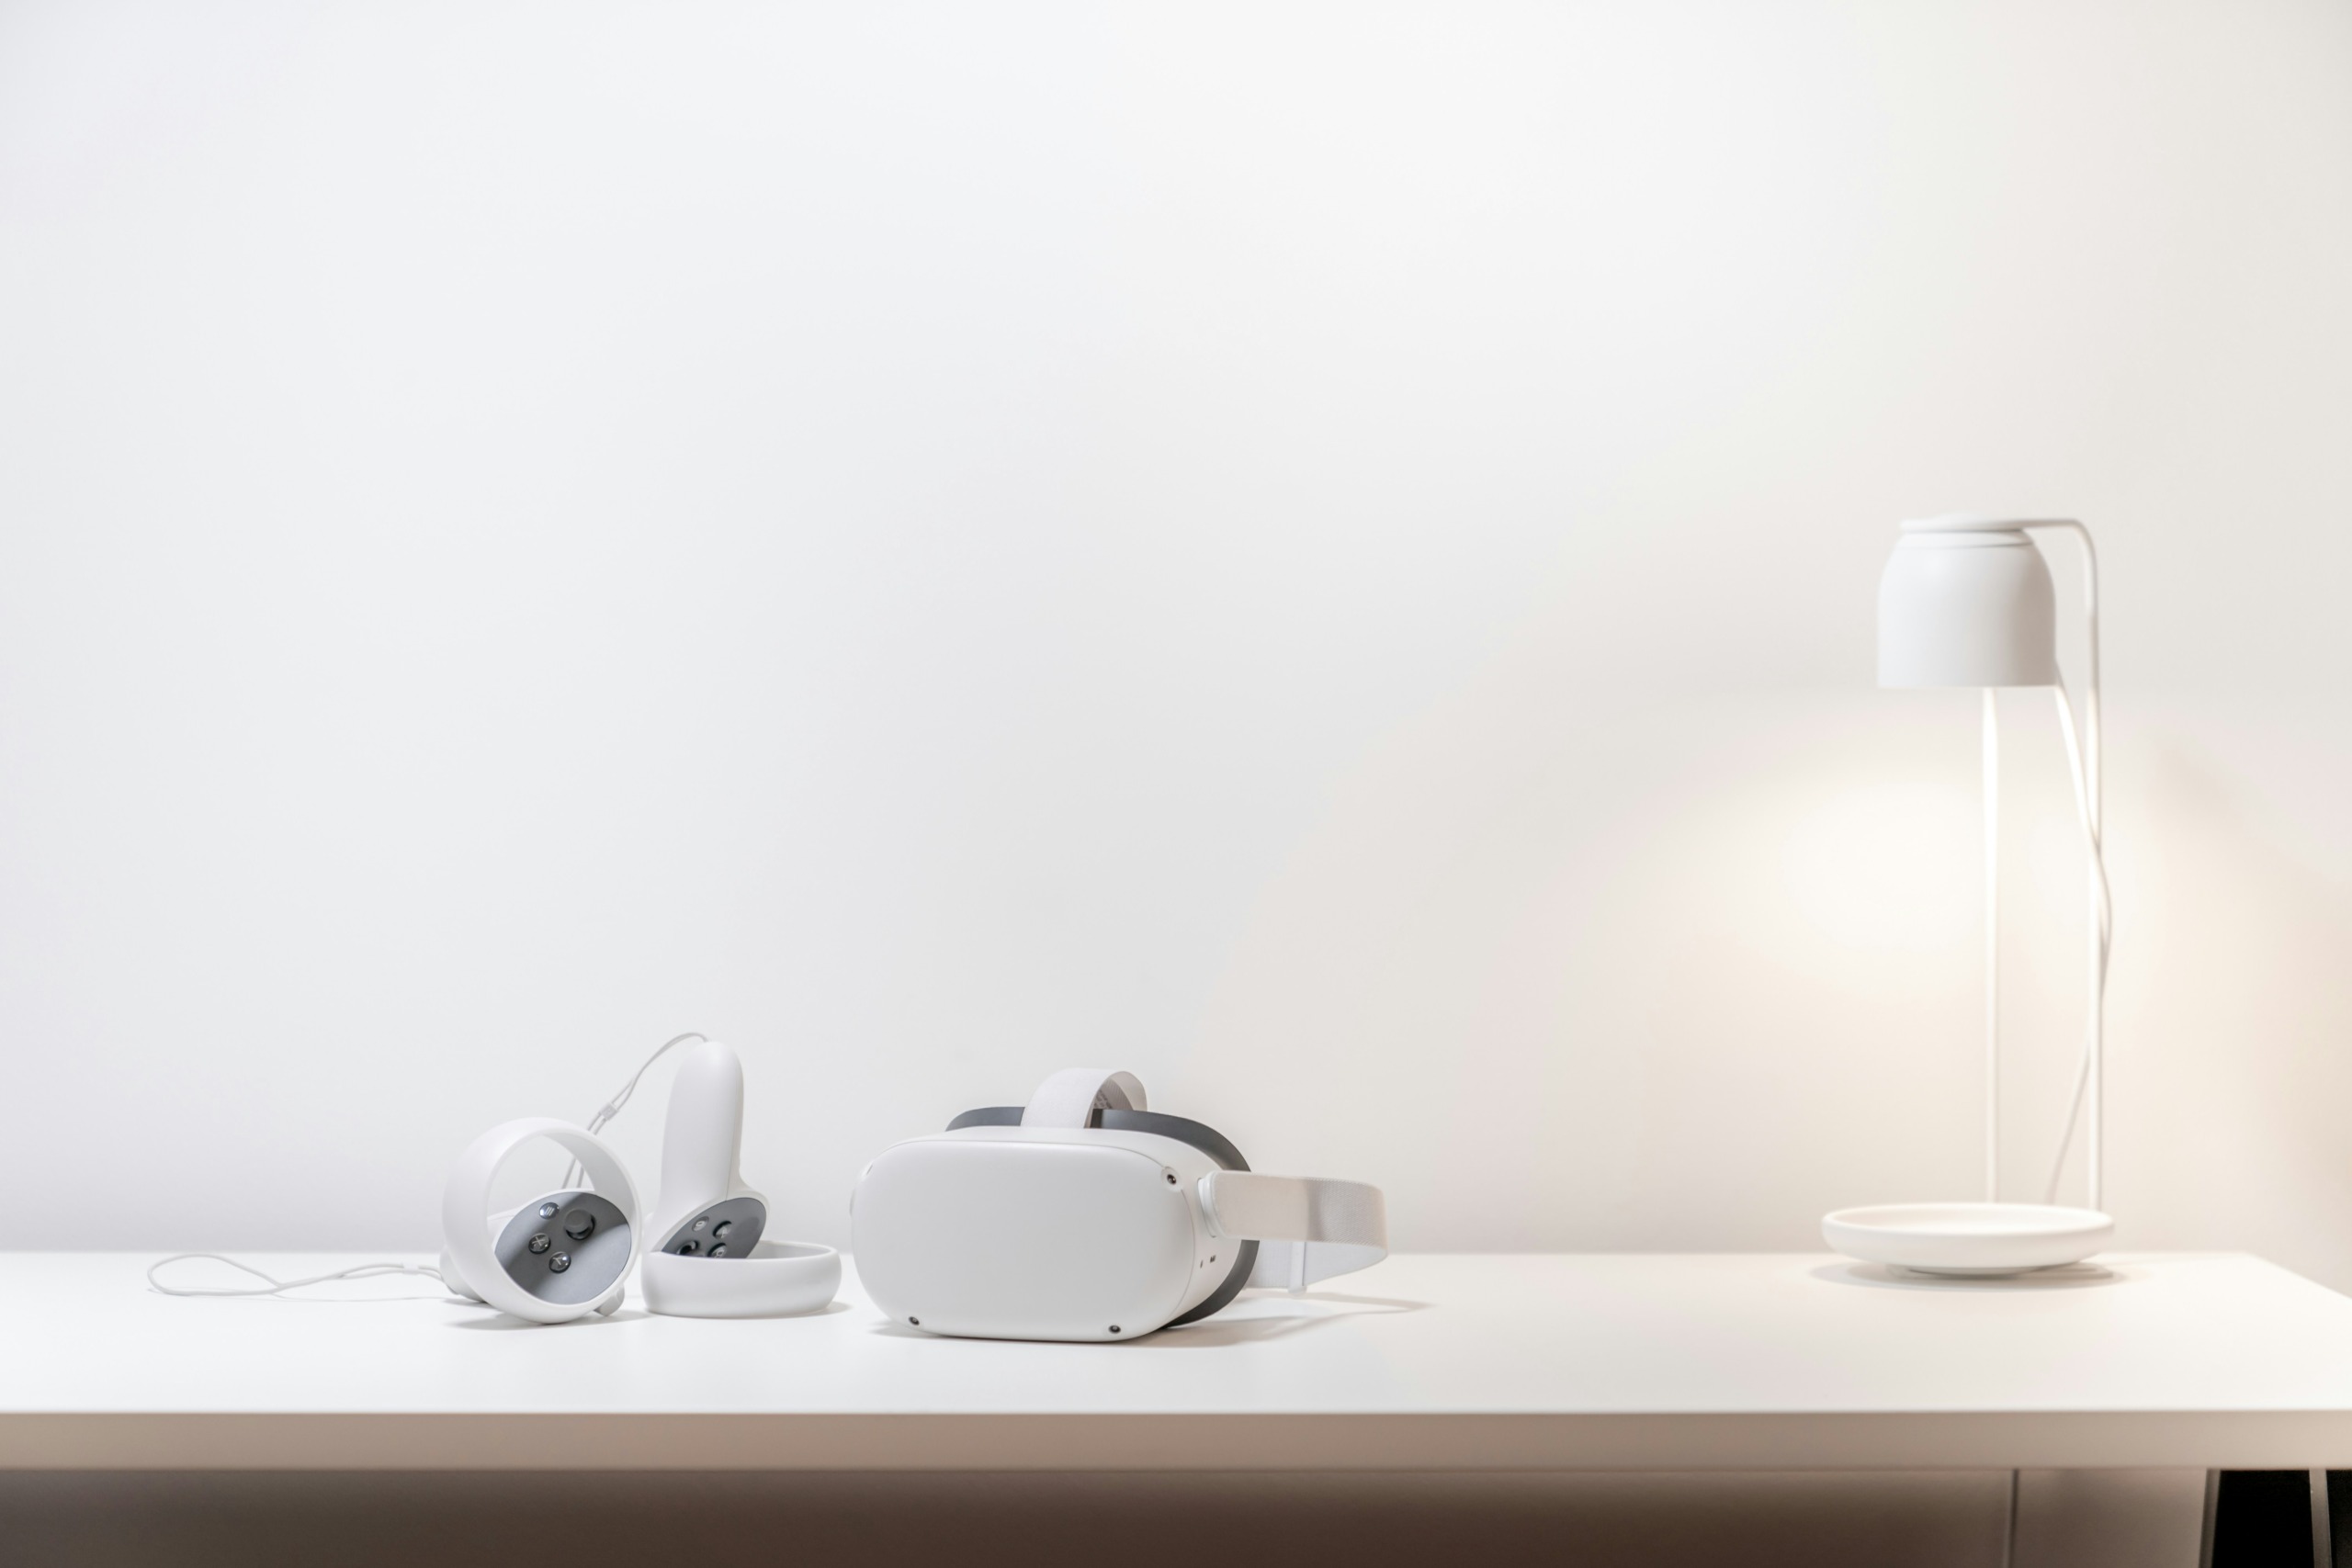 virtual reality kit over white countertop | photo by vinicius amnx amano